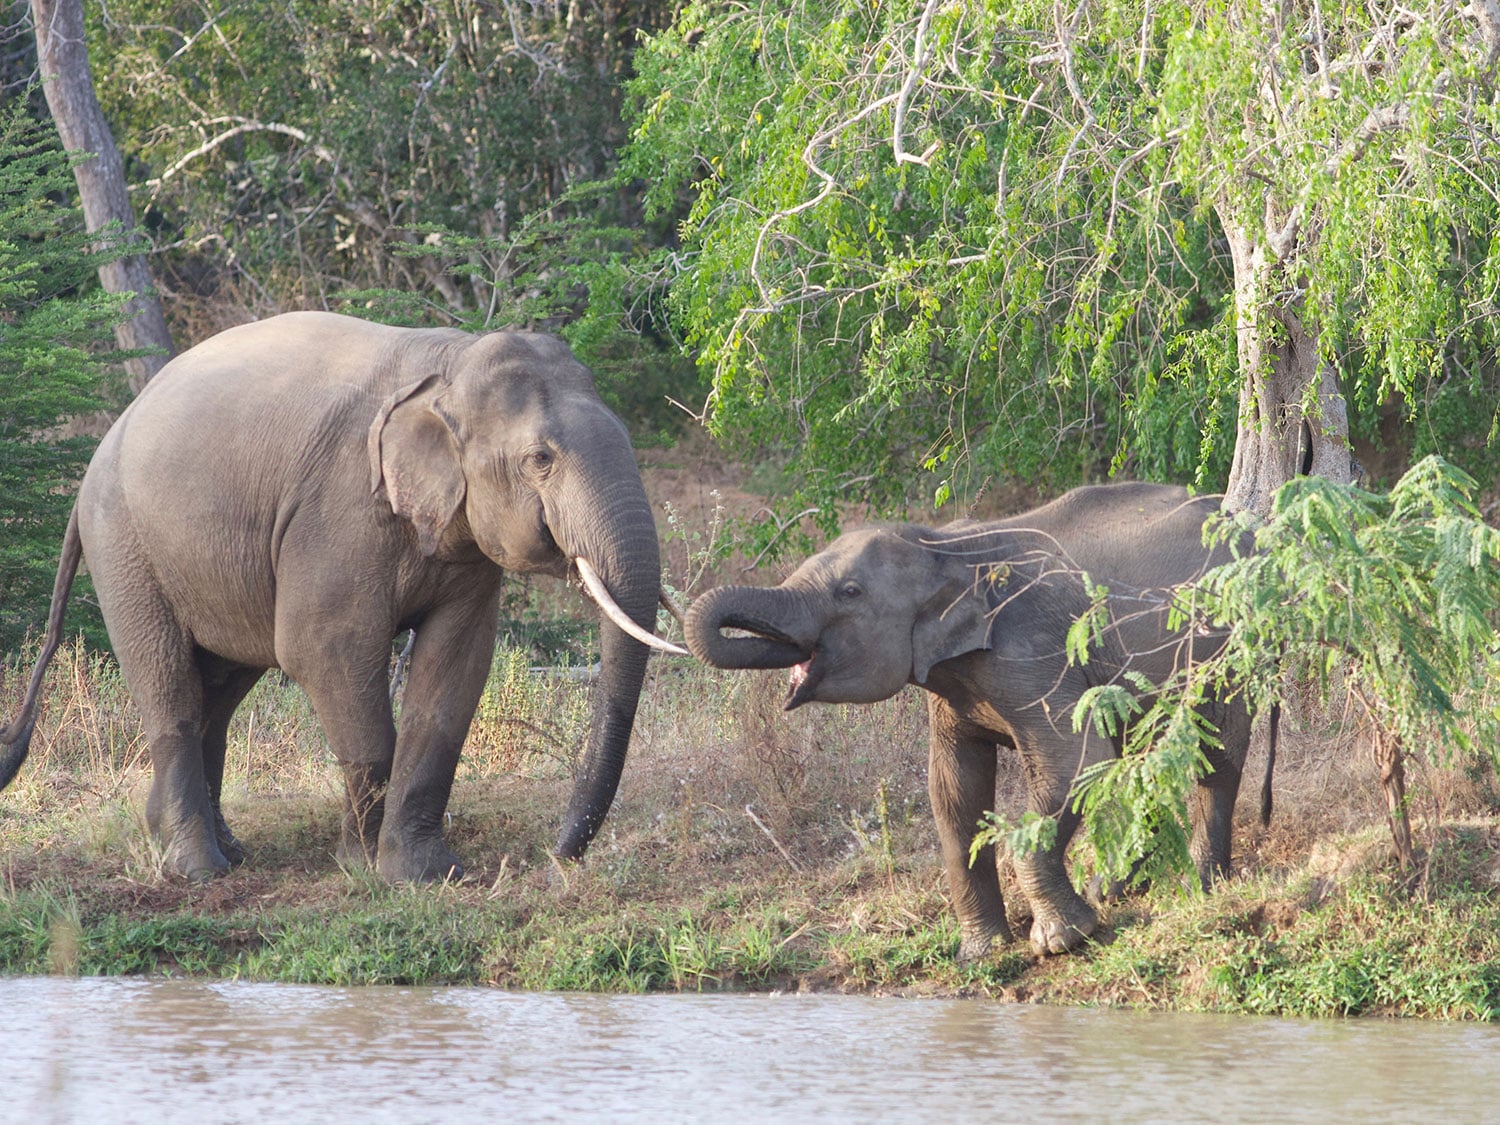 Elephants by the river at Sri Lanka's Minneriya National Park